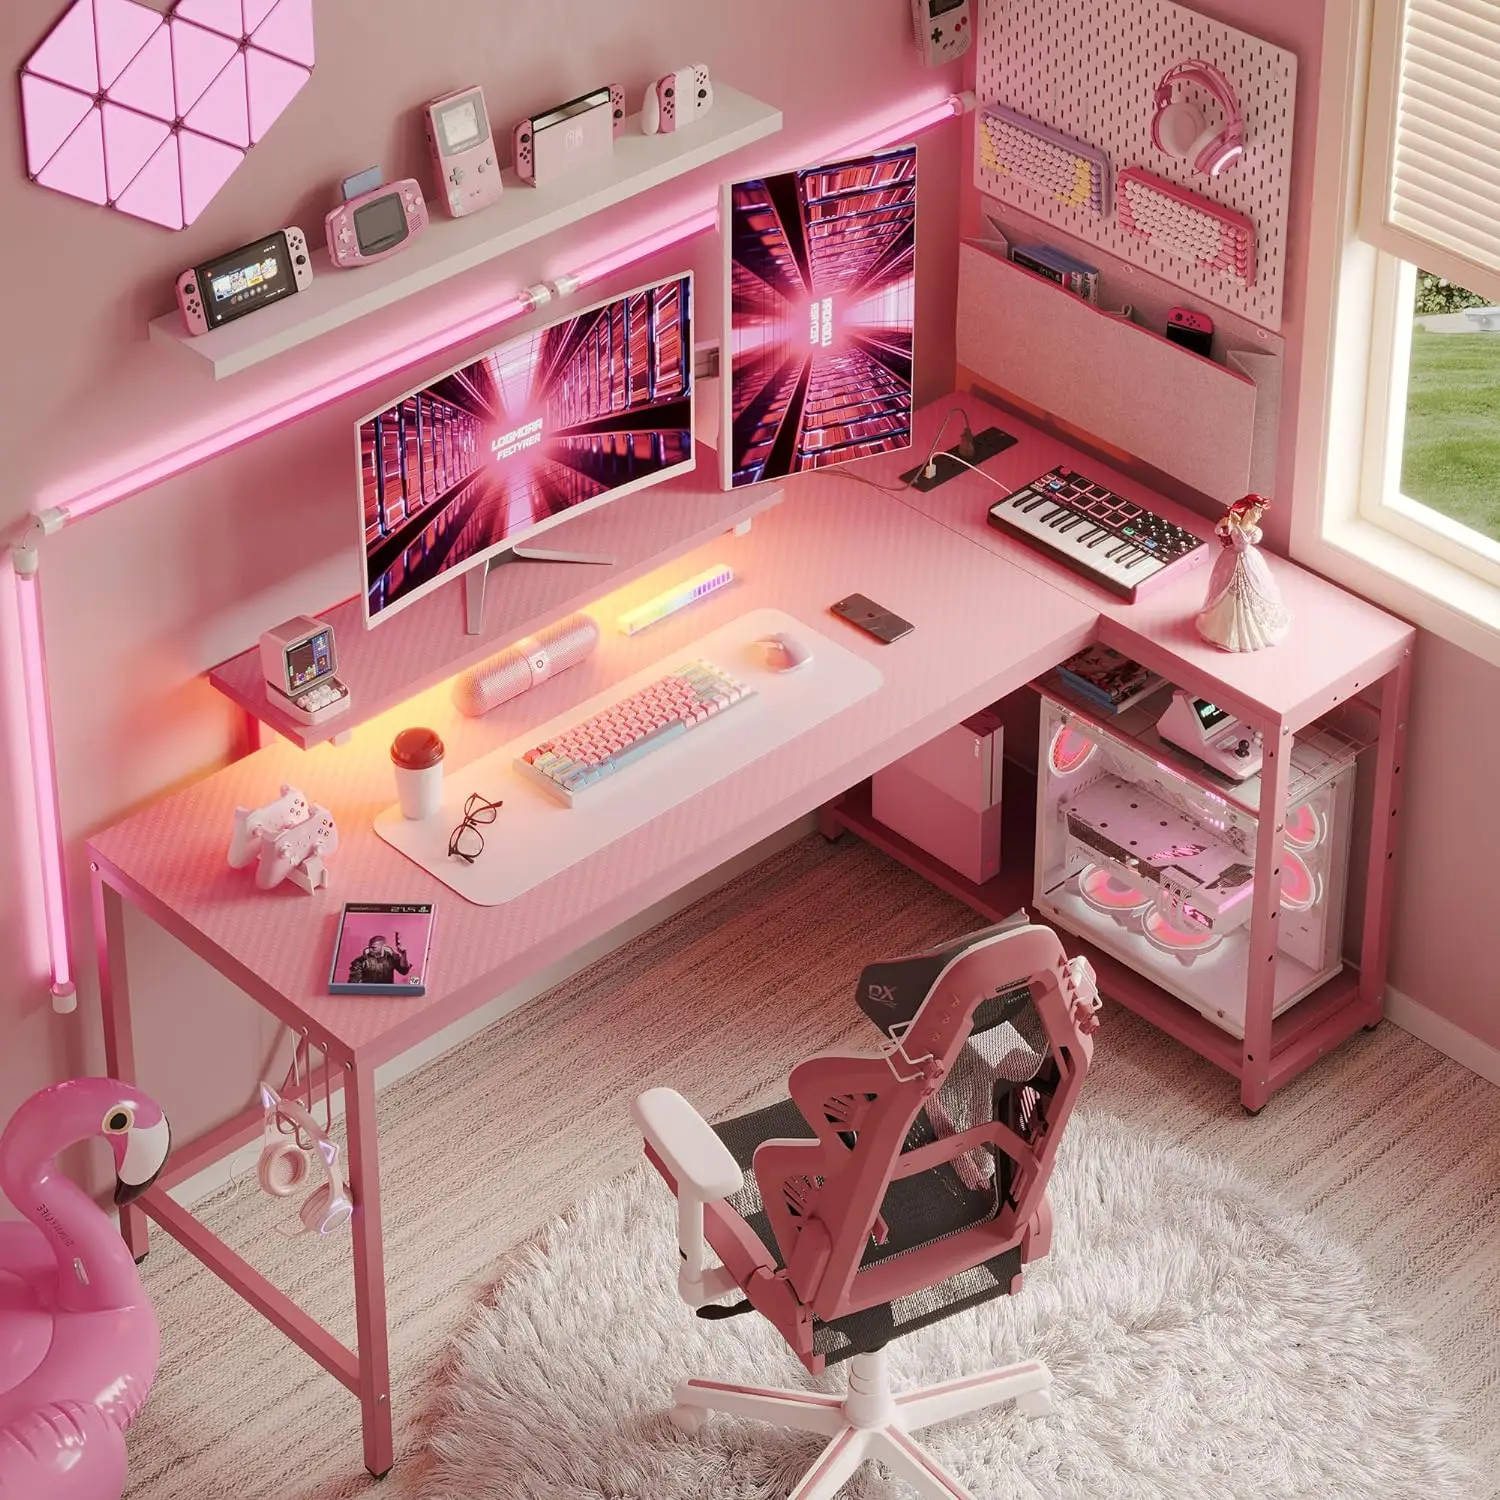 

L Shaped Gaming Desk with Power Outlets,58 LED Small Corner Desk with Reversible Storage Shelves,Pink Computer Desk